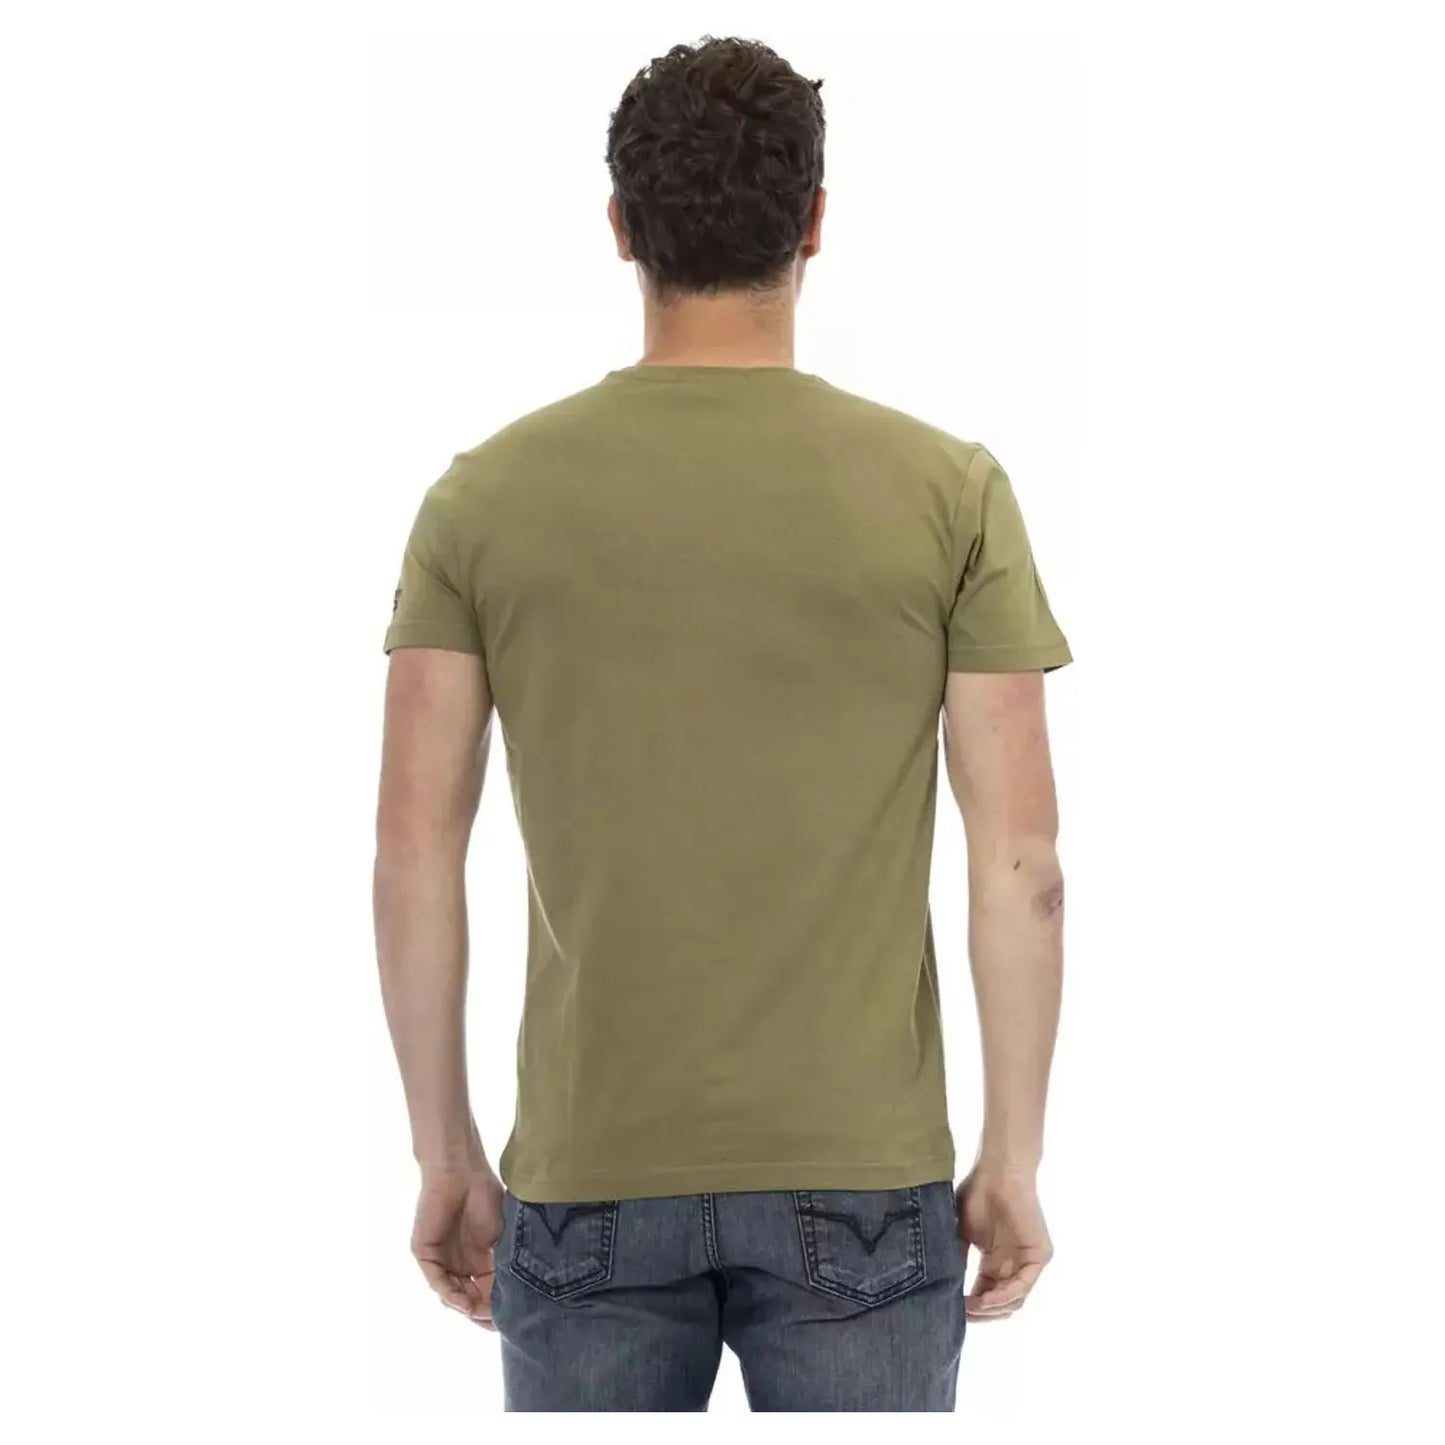 Trussardi Action Sleek Green Short Sleeve Tee with Chic Print green-cotton-t-shirt-47